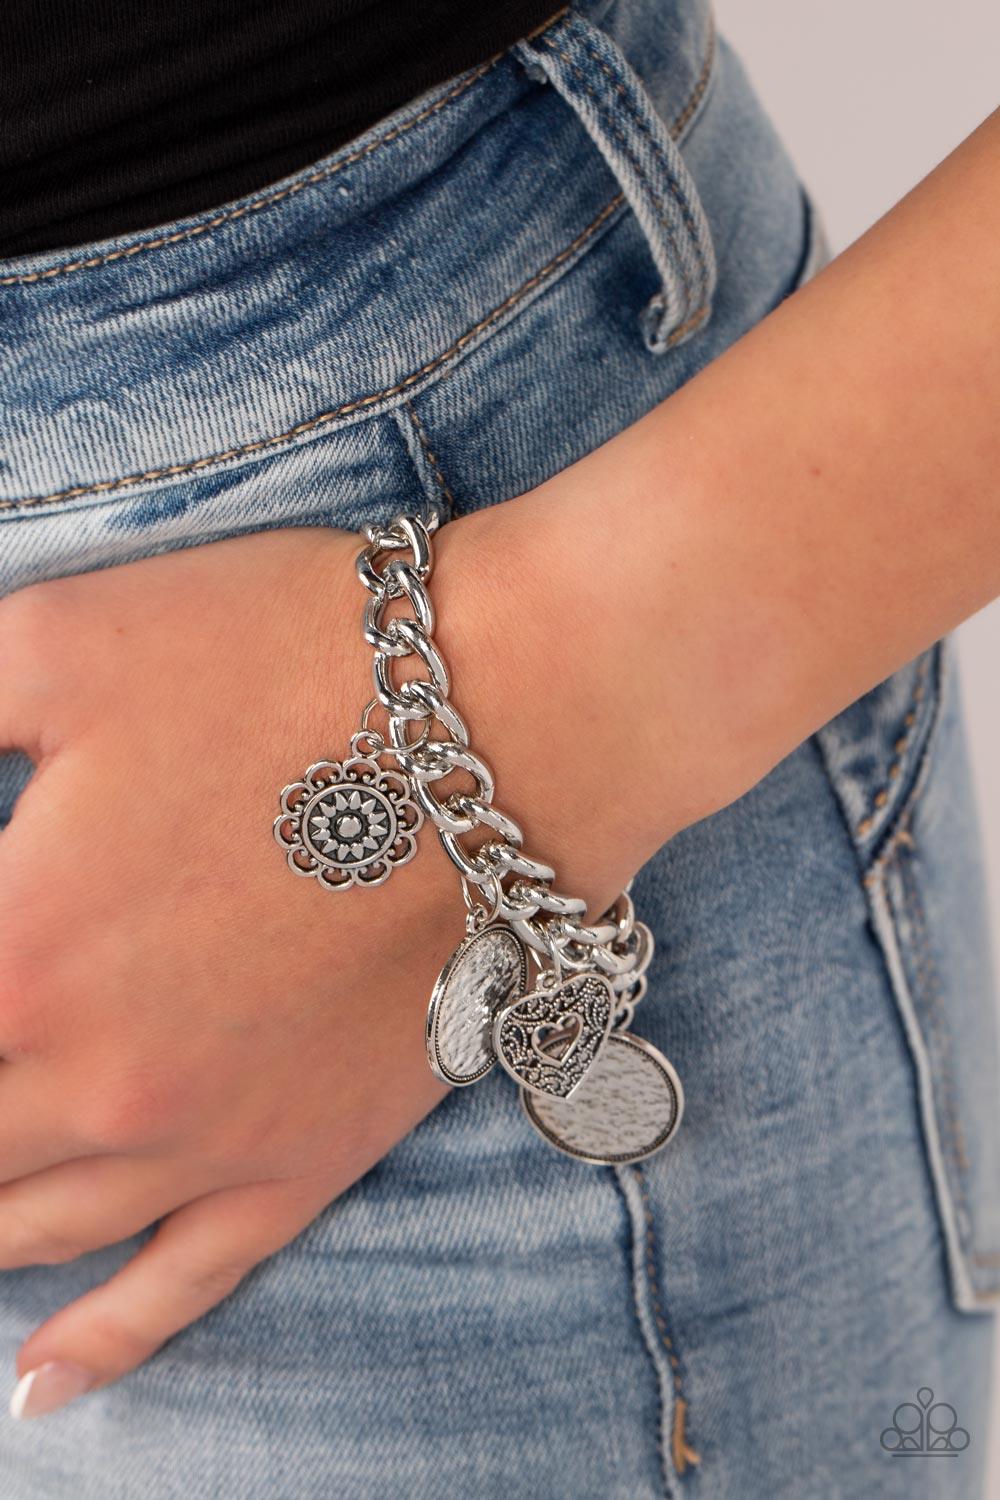 Complete CHARM-ony Silver Bracelet - Jewelry by Bretta - Jewelry by Bretta